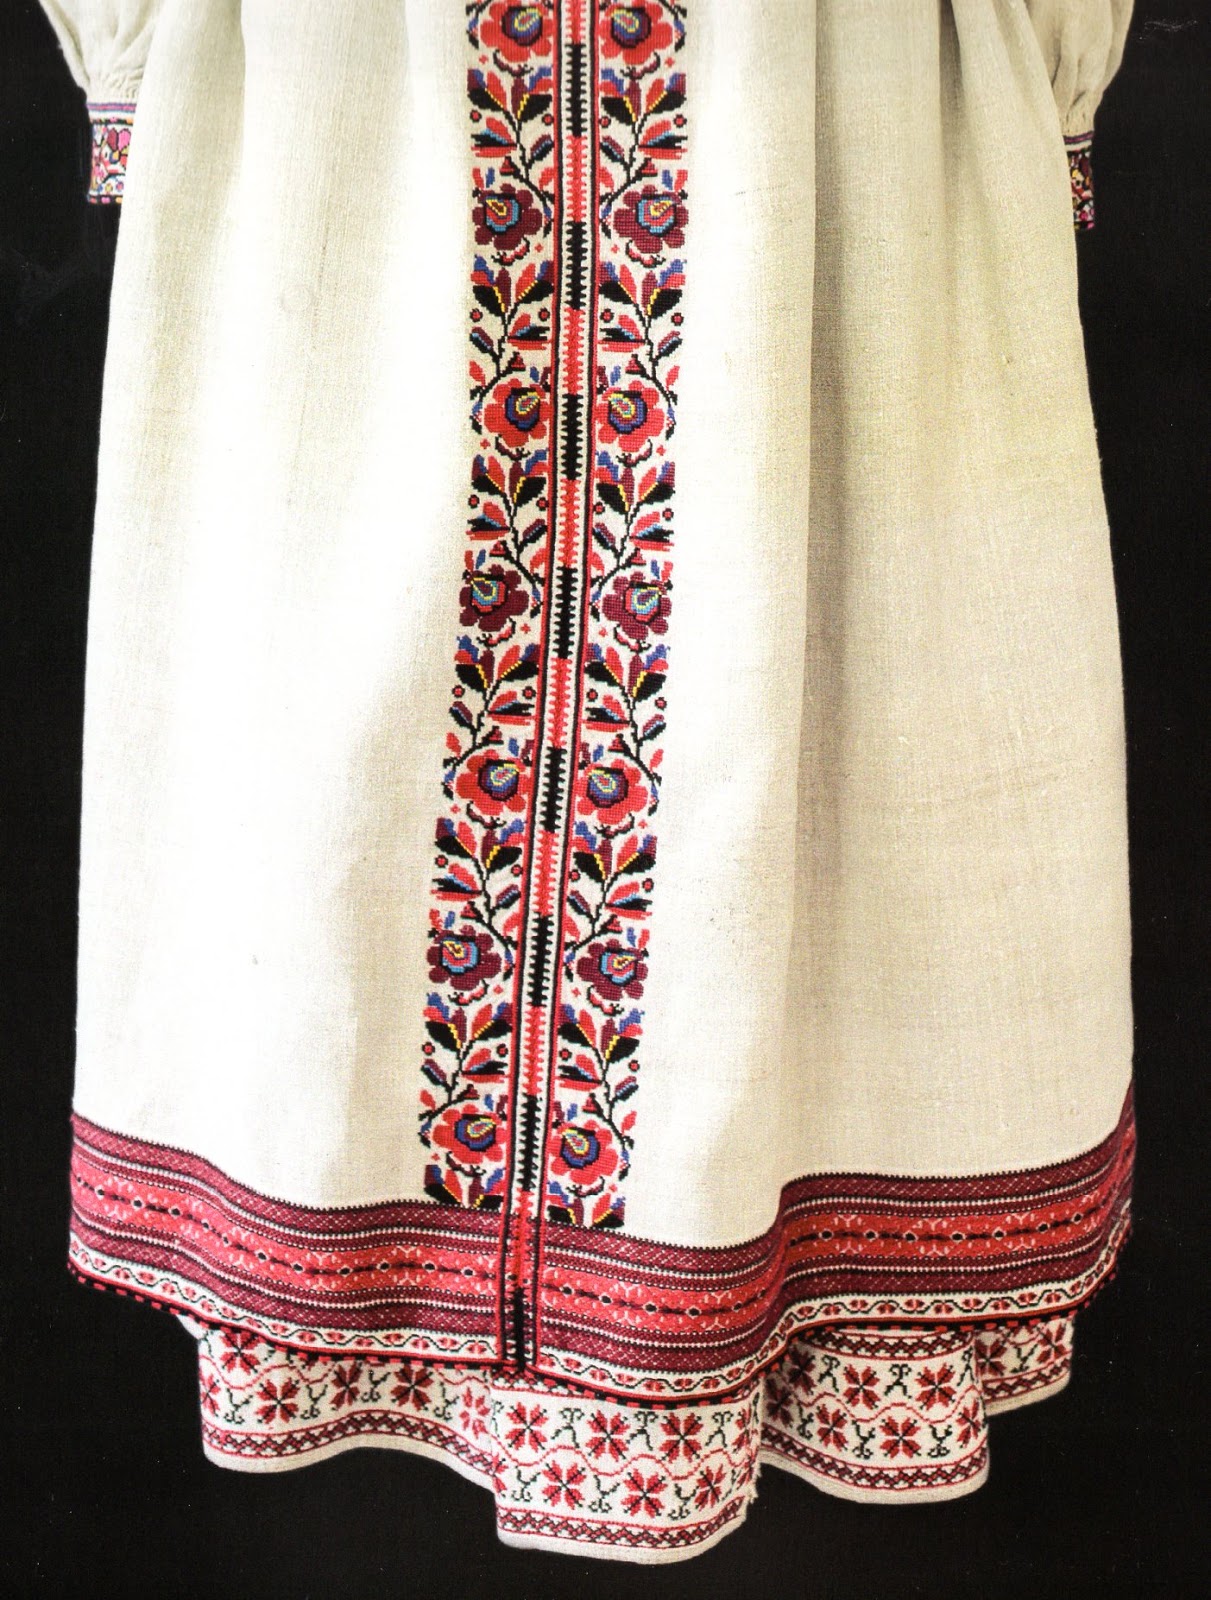 FolkCostume&Embroidery: Posvichchia or Zhydachiw Costume, West Ukraine